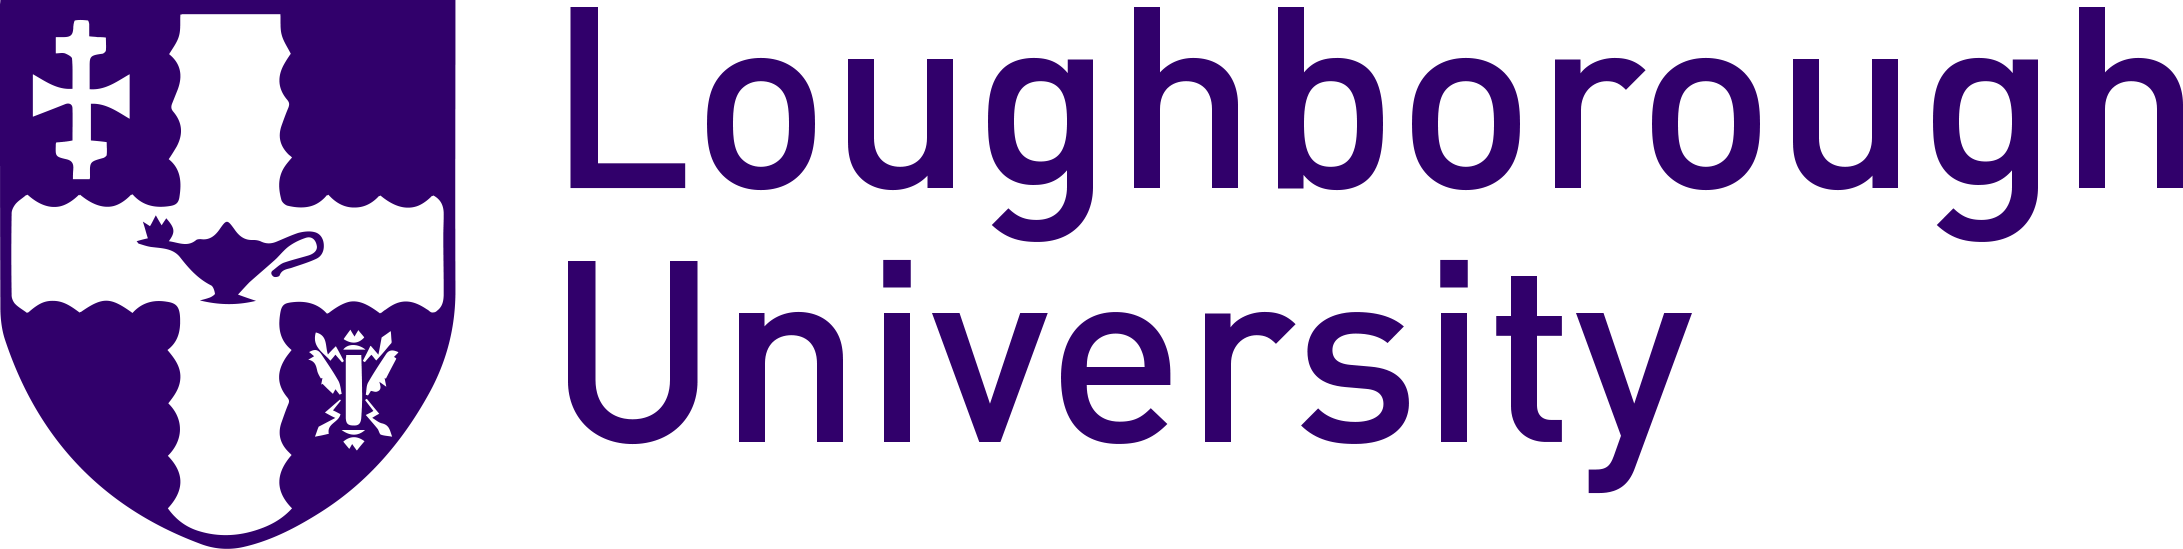 Loughborough University logo transparent background